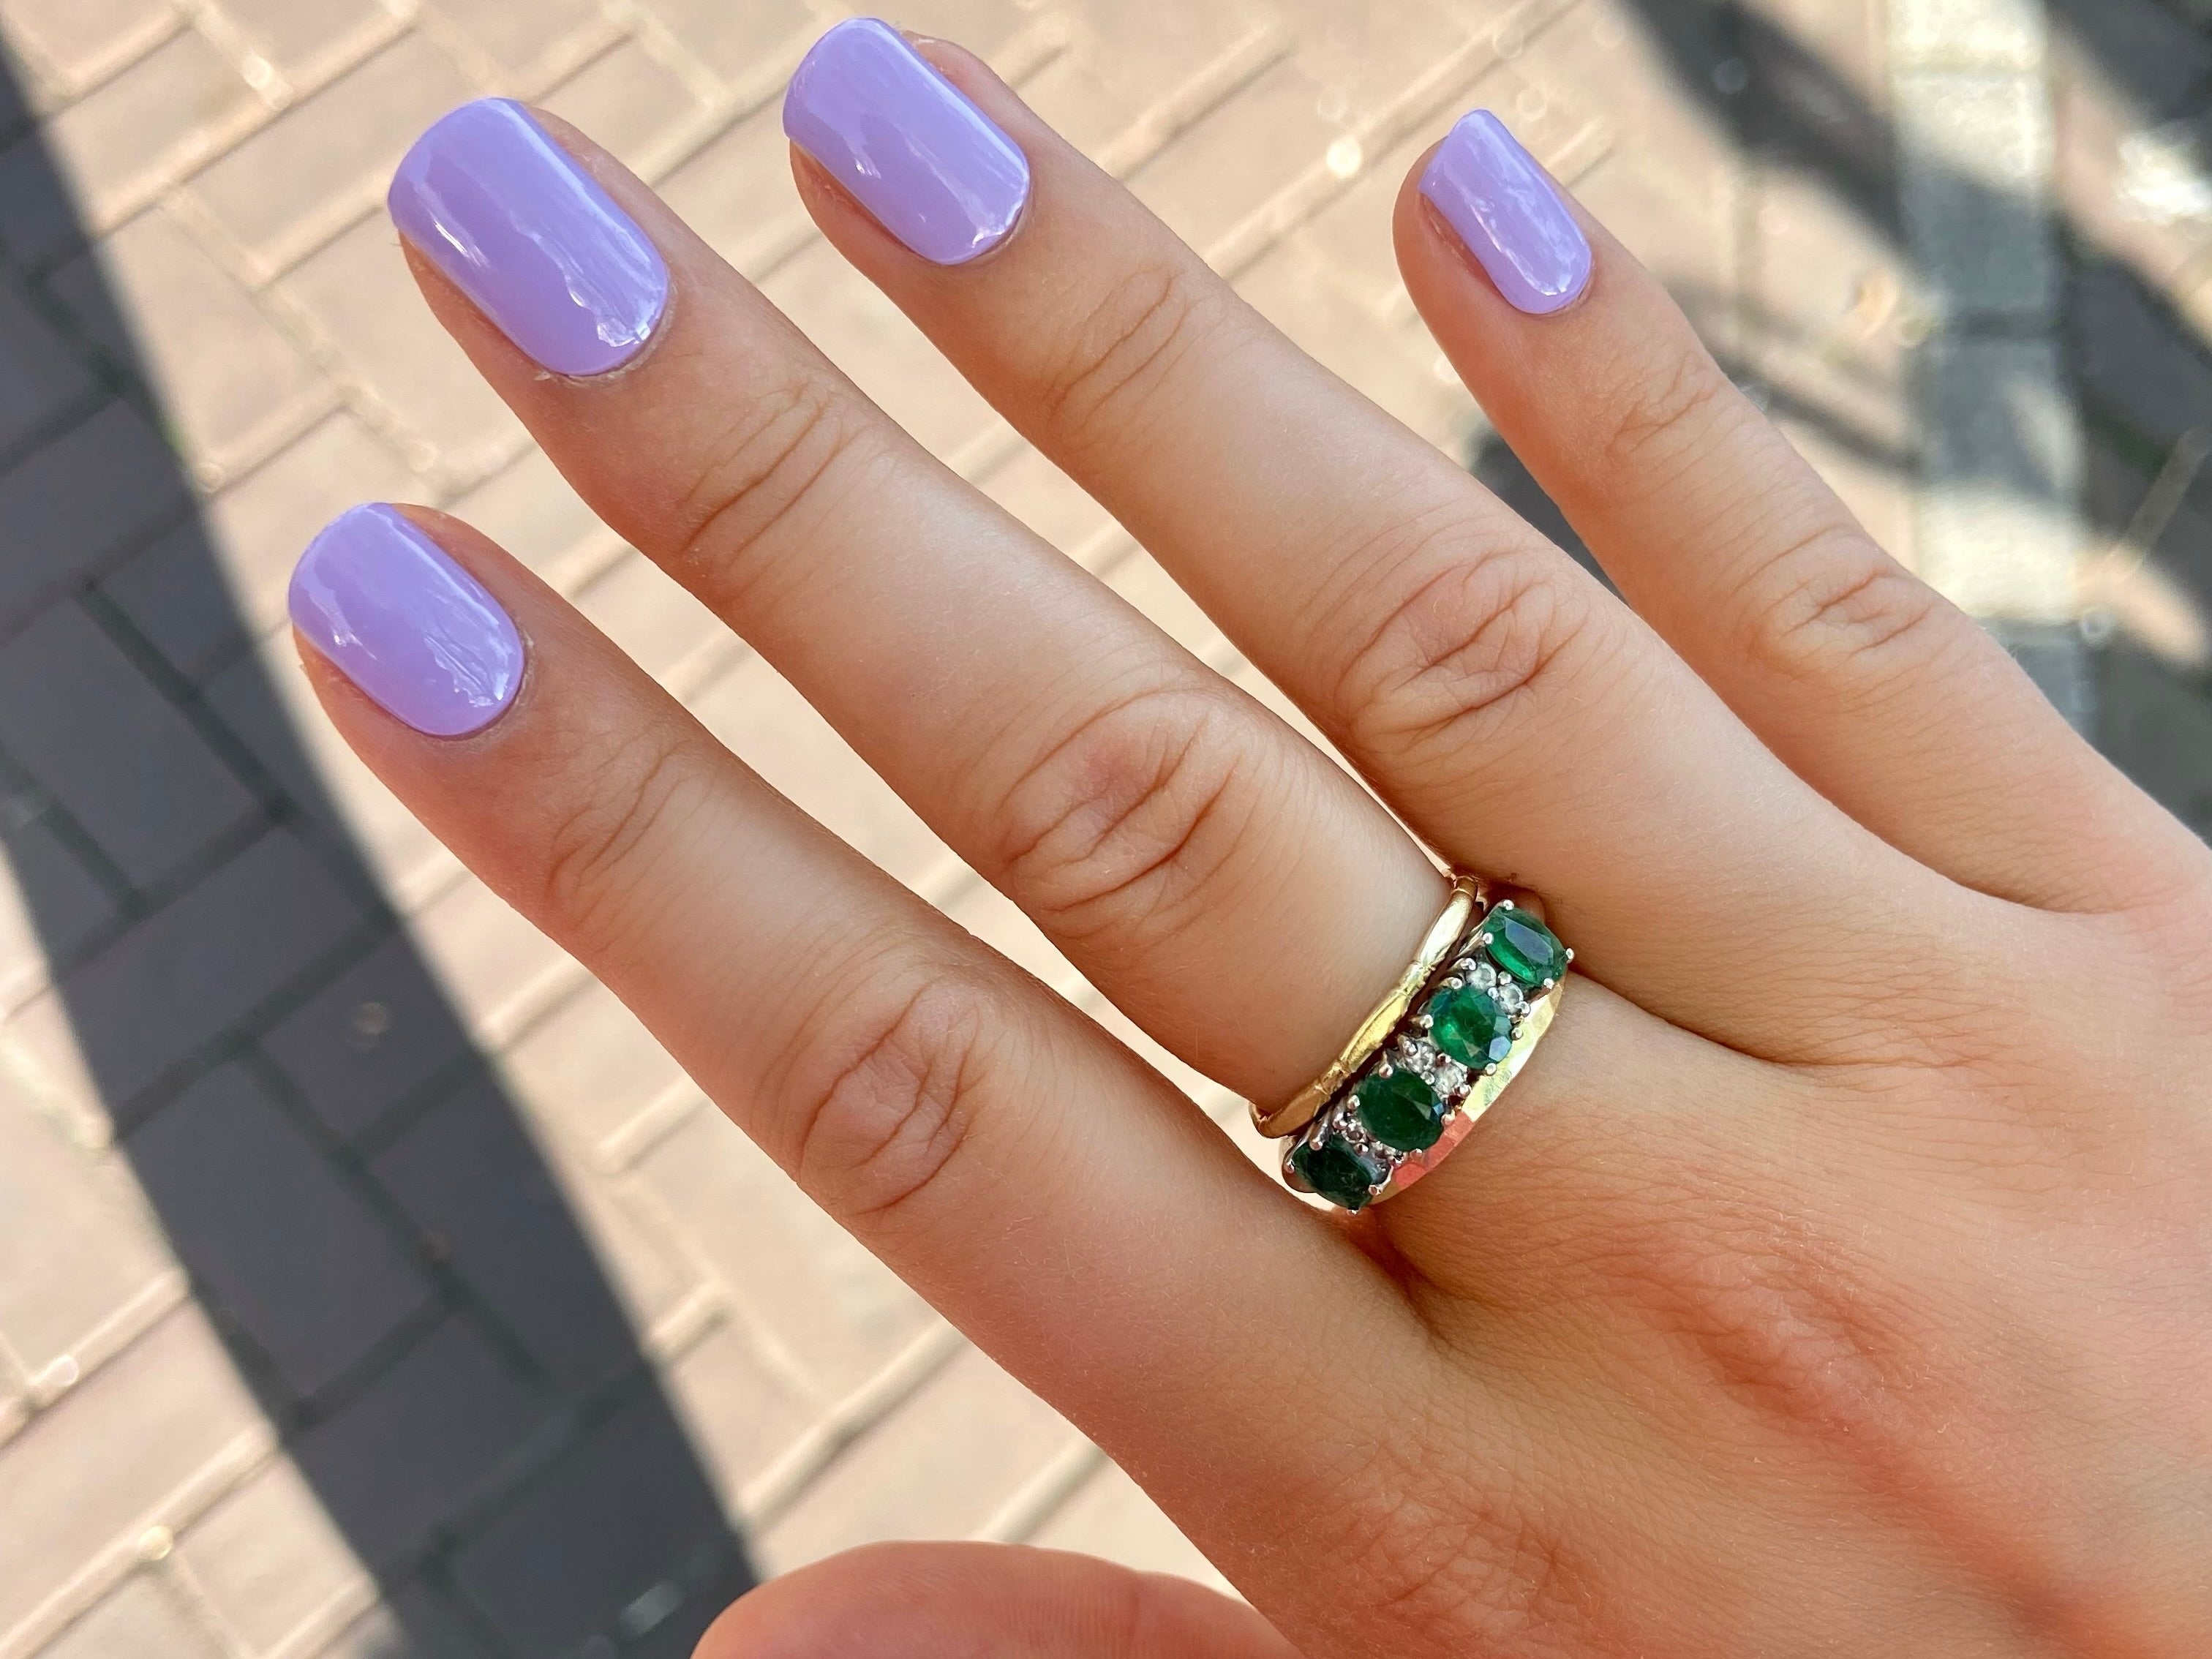 Anna's Lila Maniac Nails gellak stickers Manicure Purple Golden ring